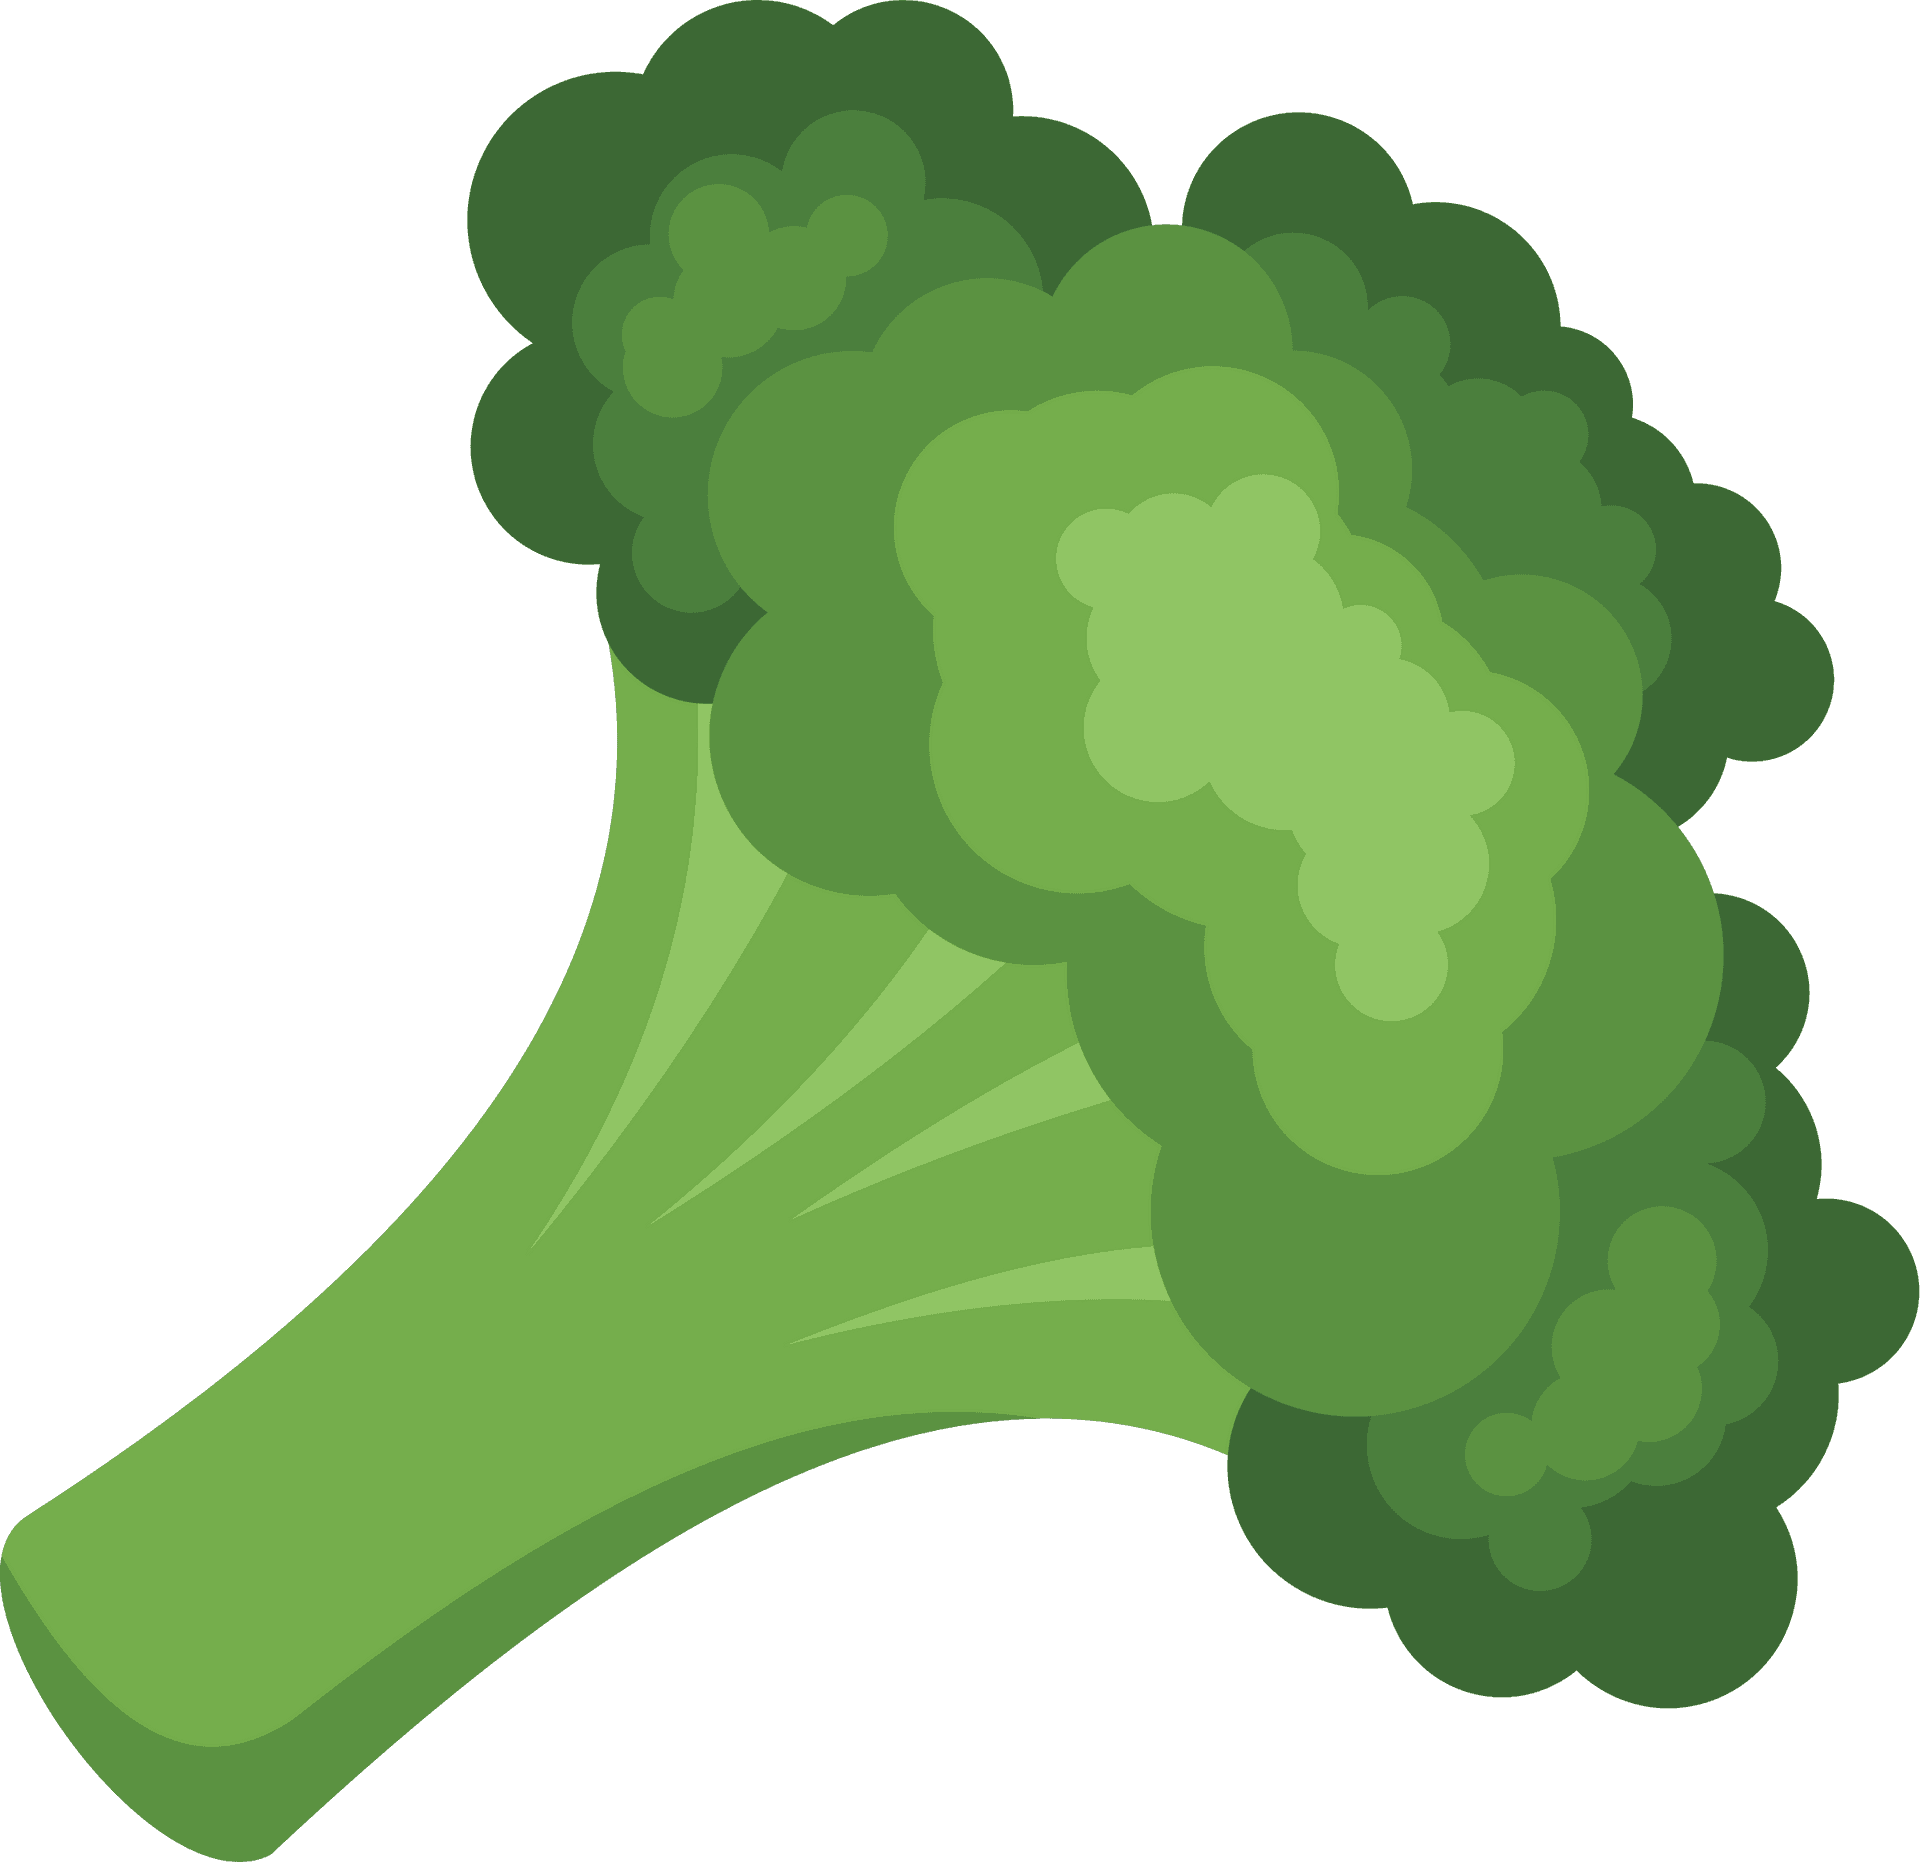 Cartoon Broccoli Graphic PNG image